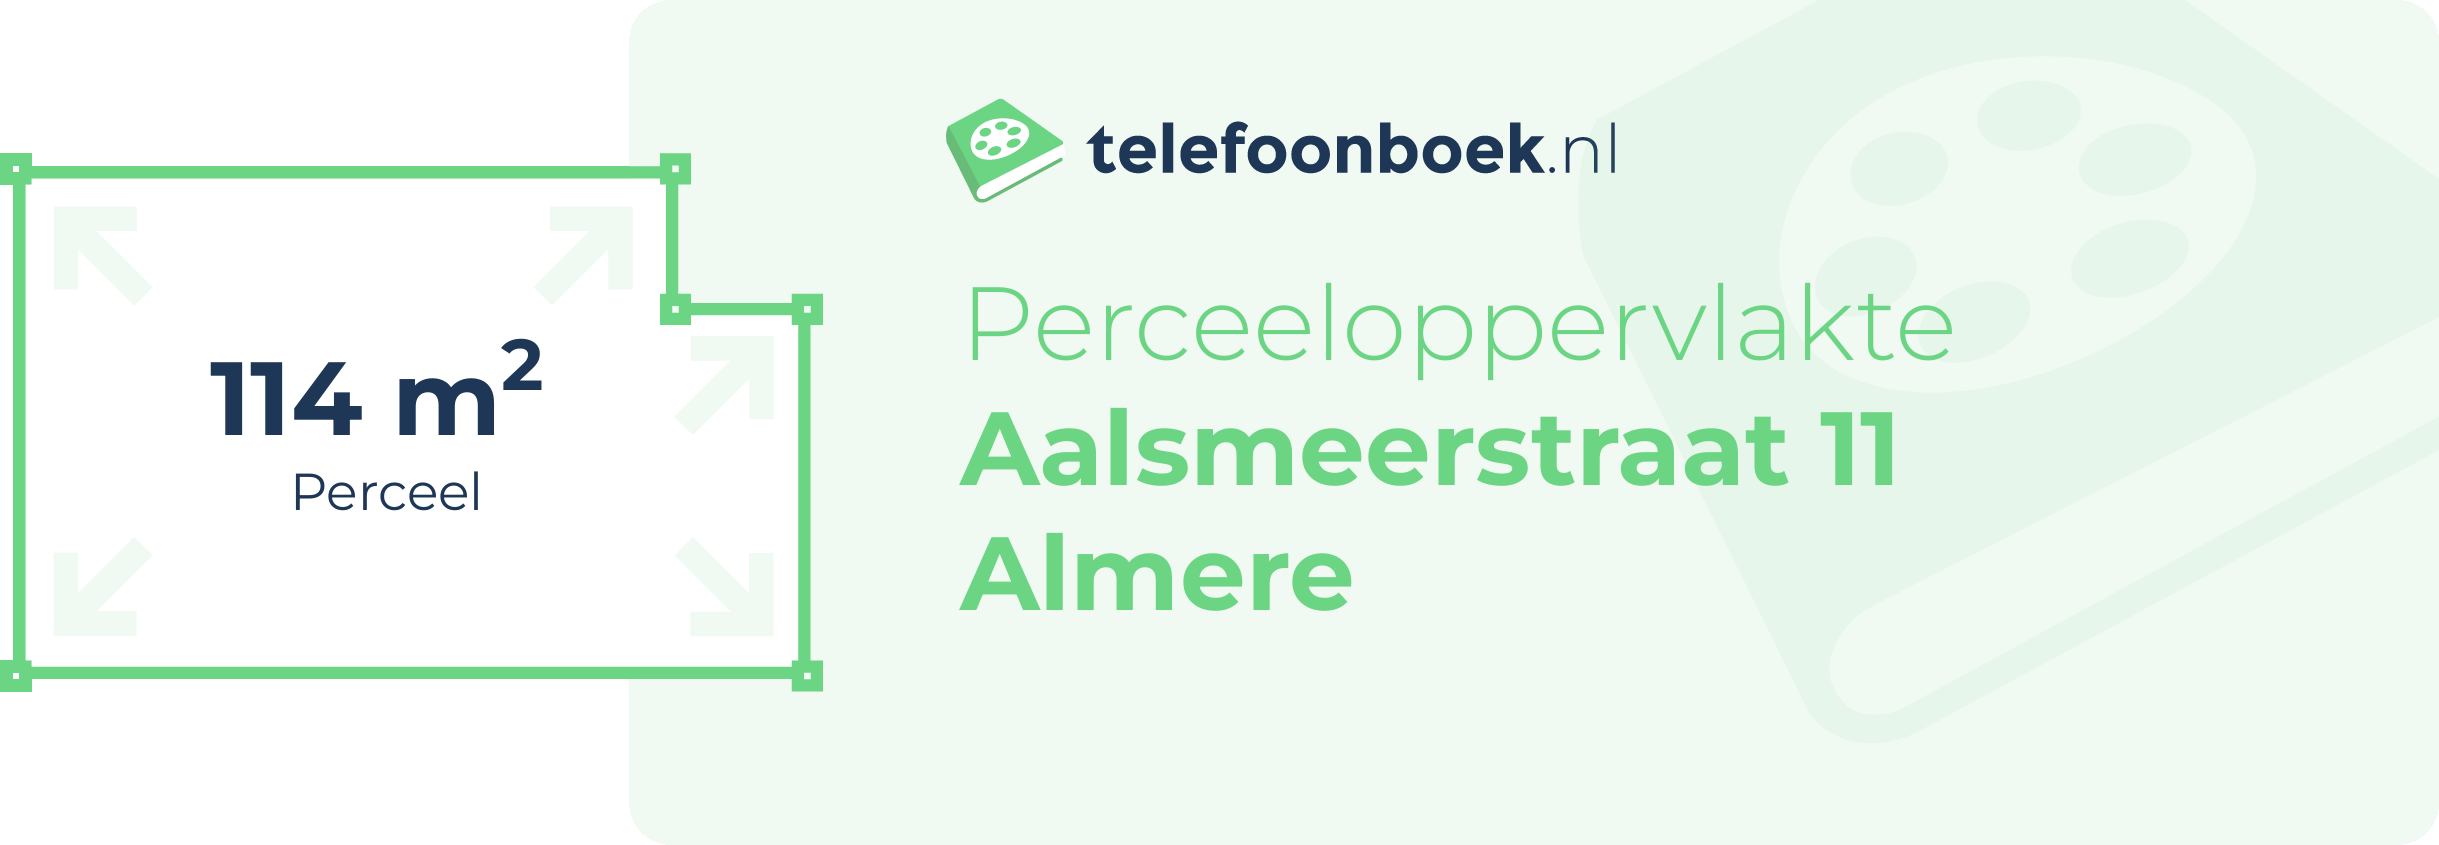 Perceeloppervlakte Aalsmeerstraat 11 Almere